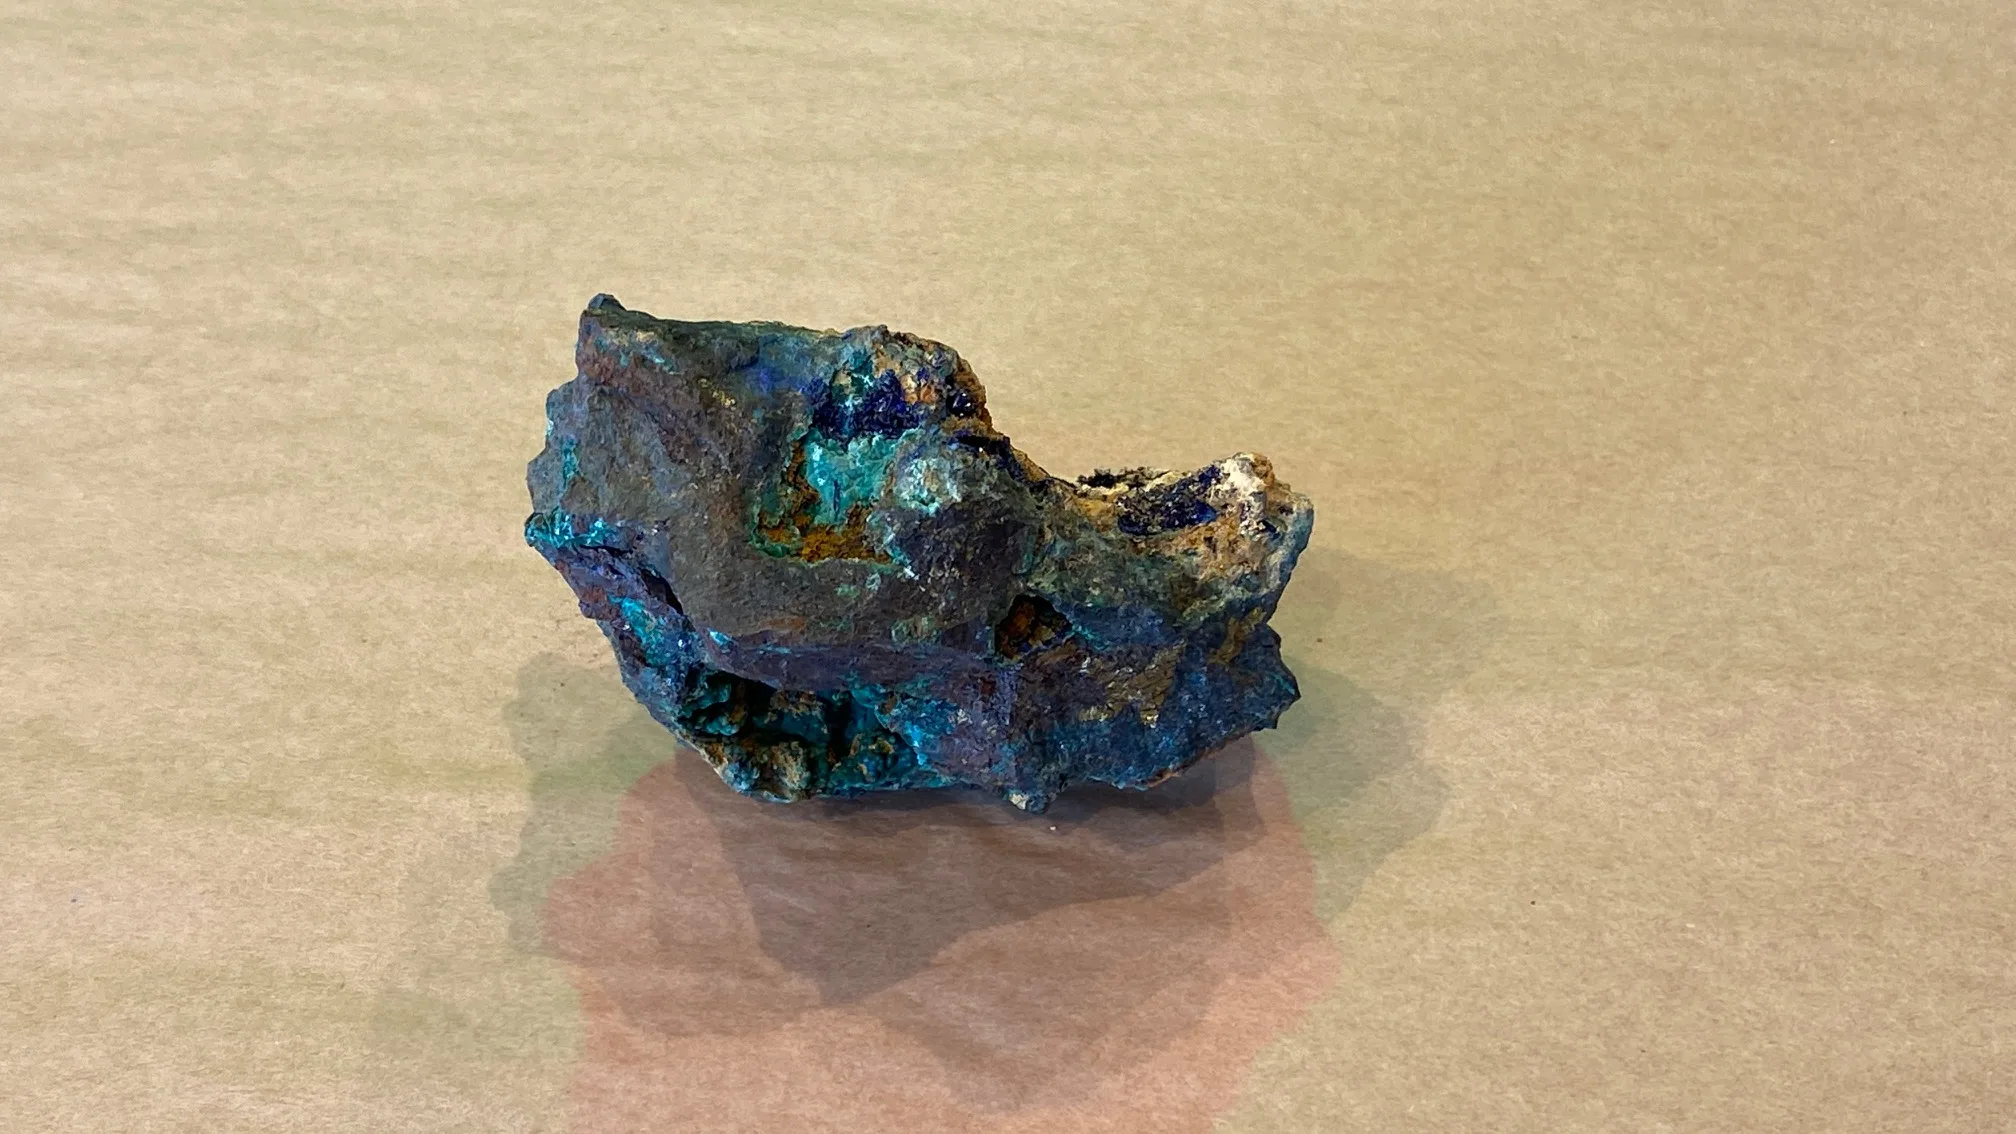 Azurite, Malachite   Stone of Transformation Prehistoric Online